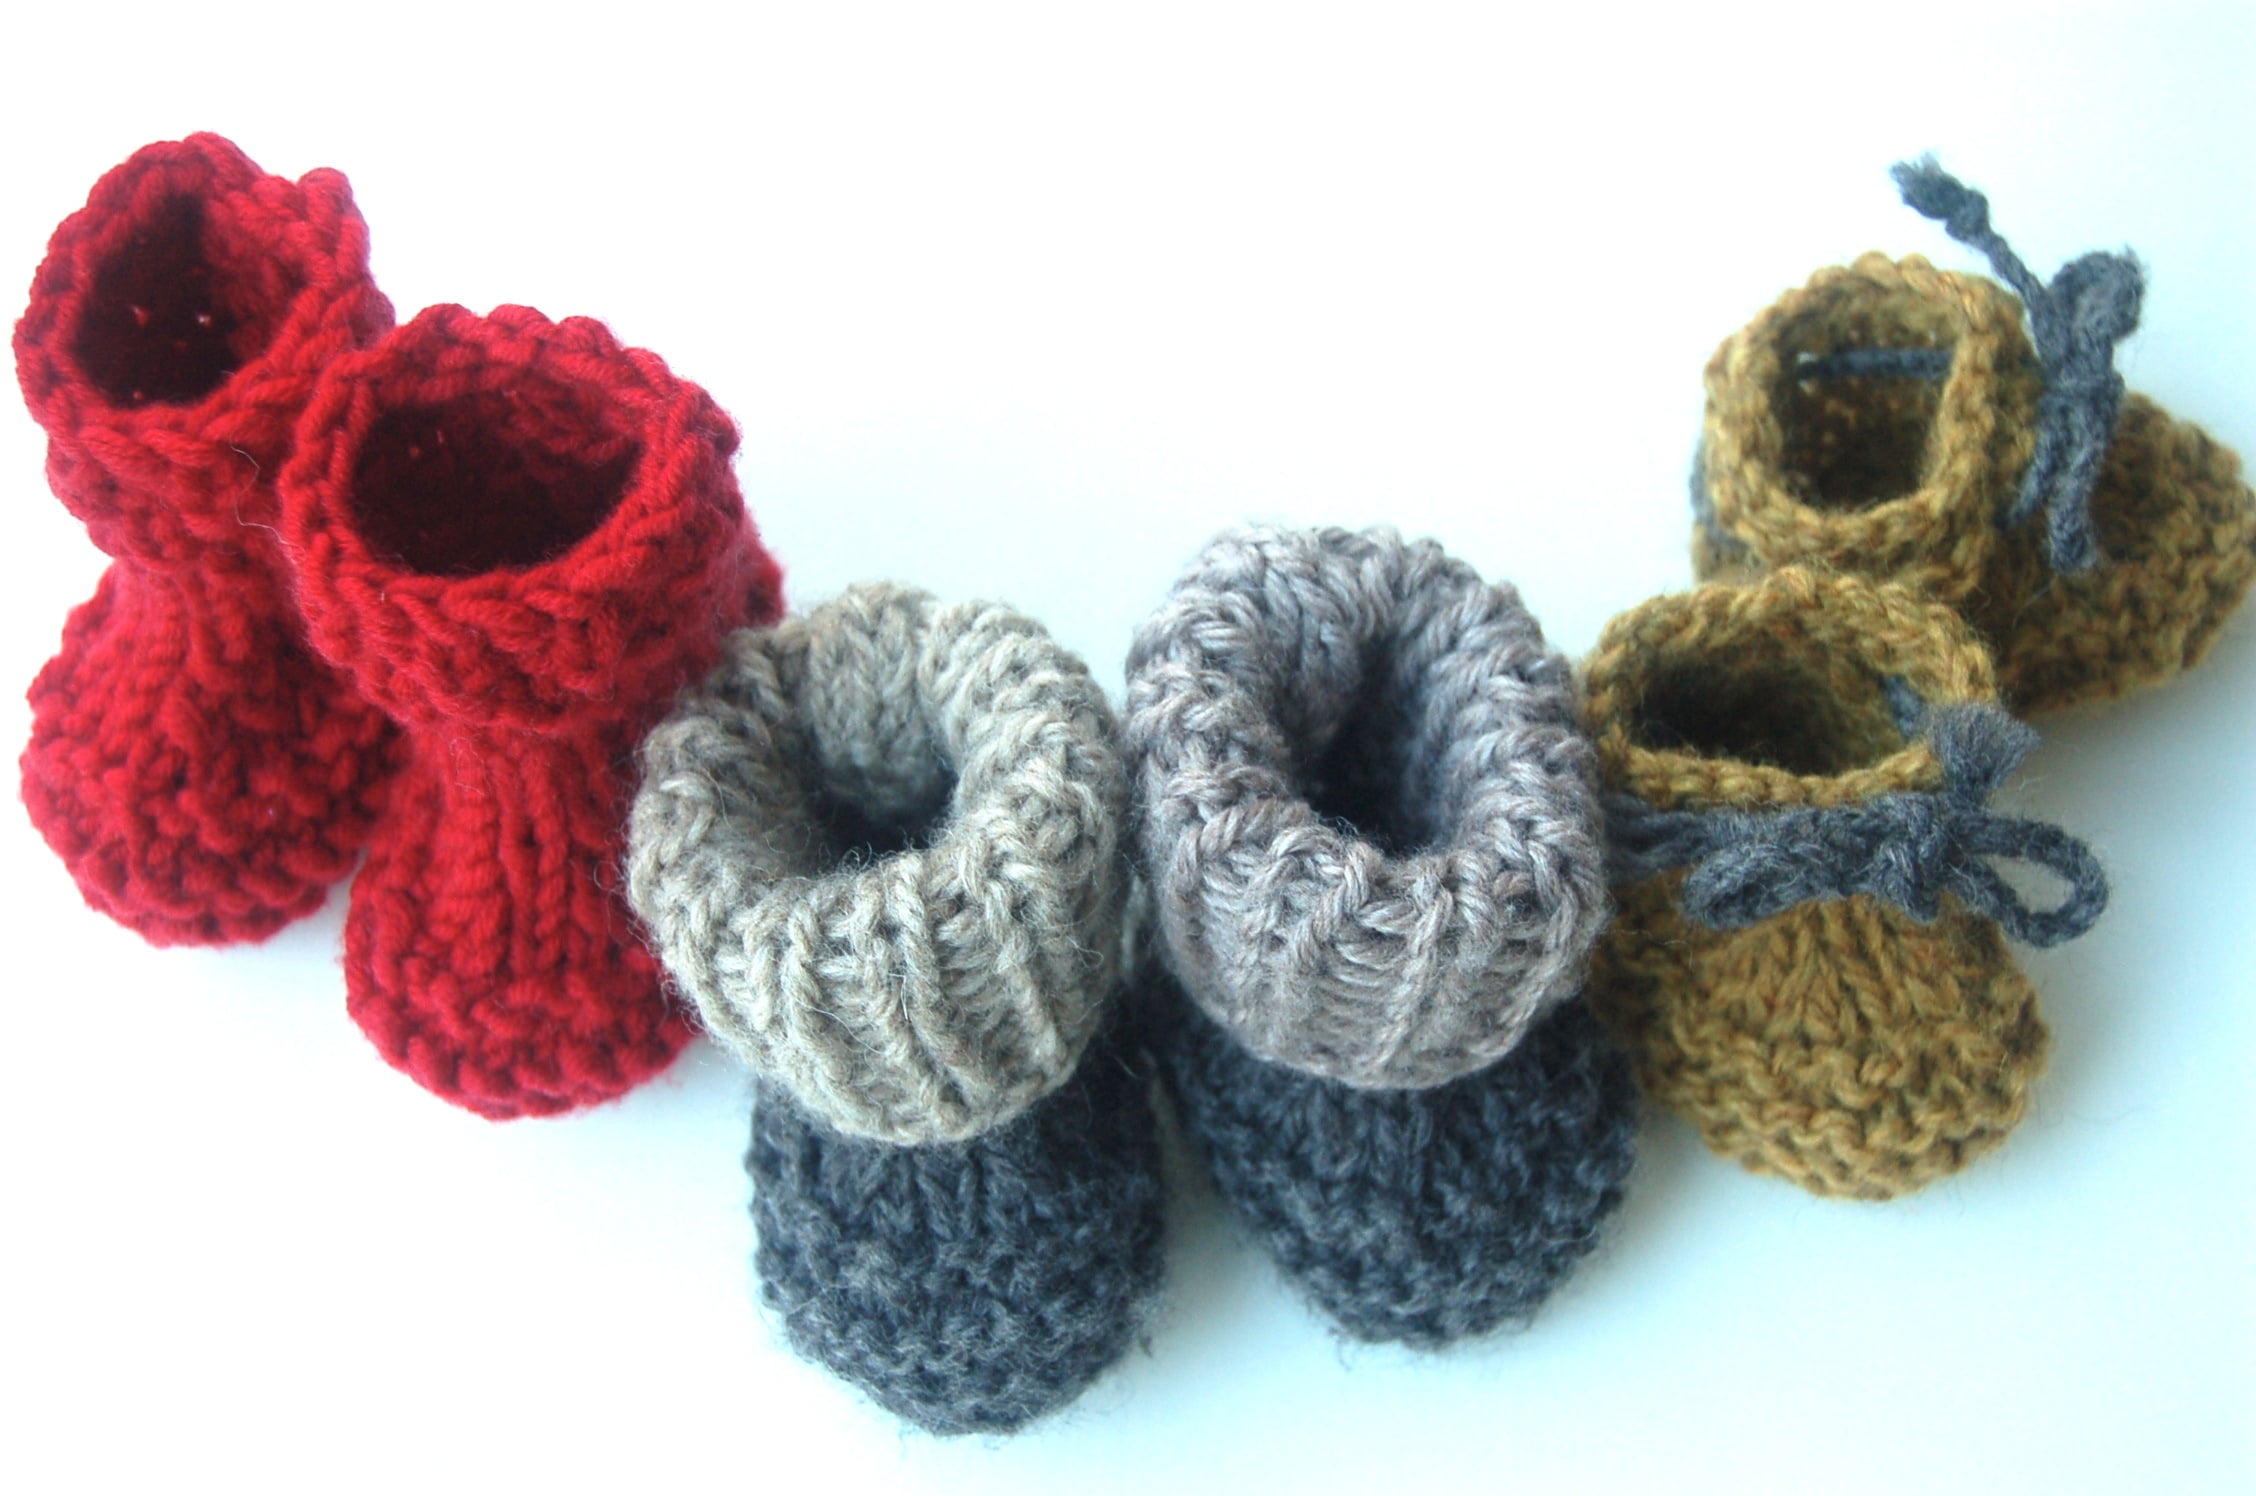 Baby Steps Booties knitting pattern by Lisa Chemery - Frogginette Knitting Patterns